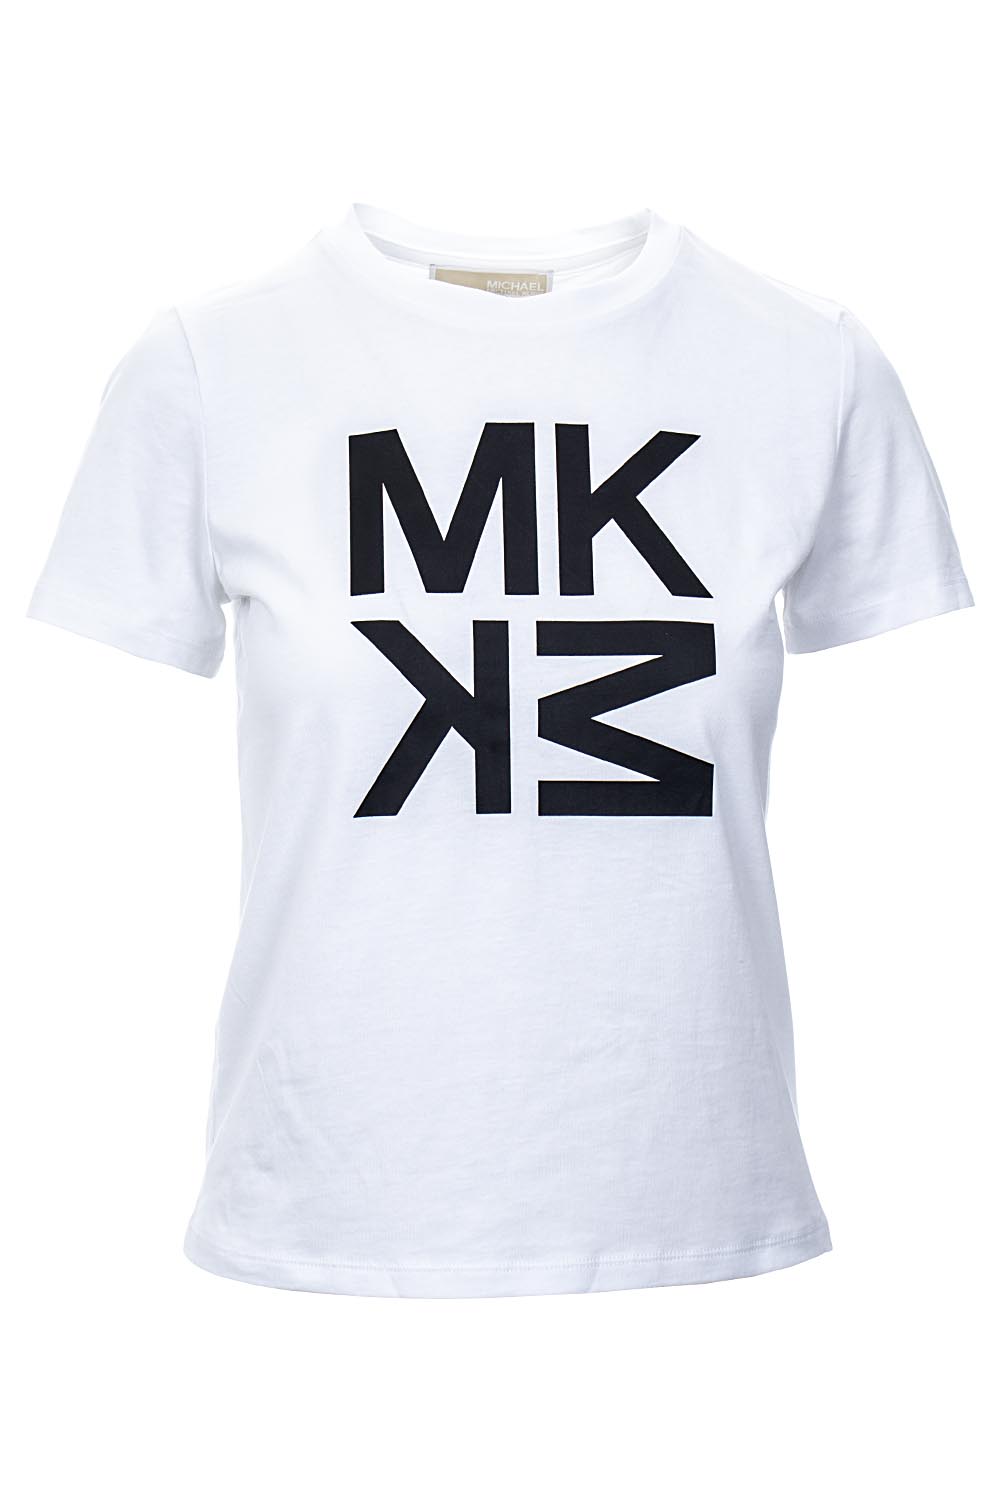 Michael Kors Dámské tričko bílé s monogramem MK Velikost: L